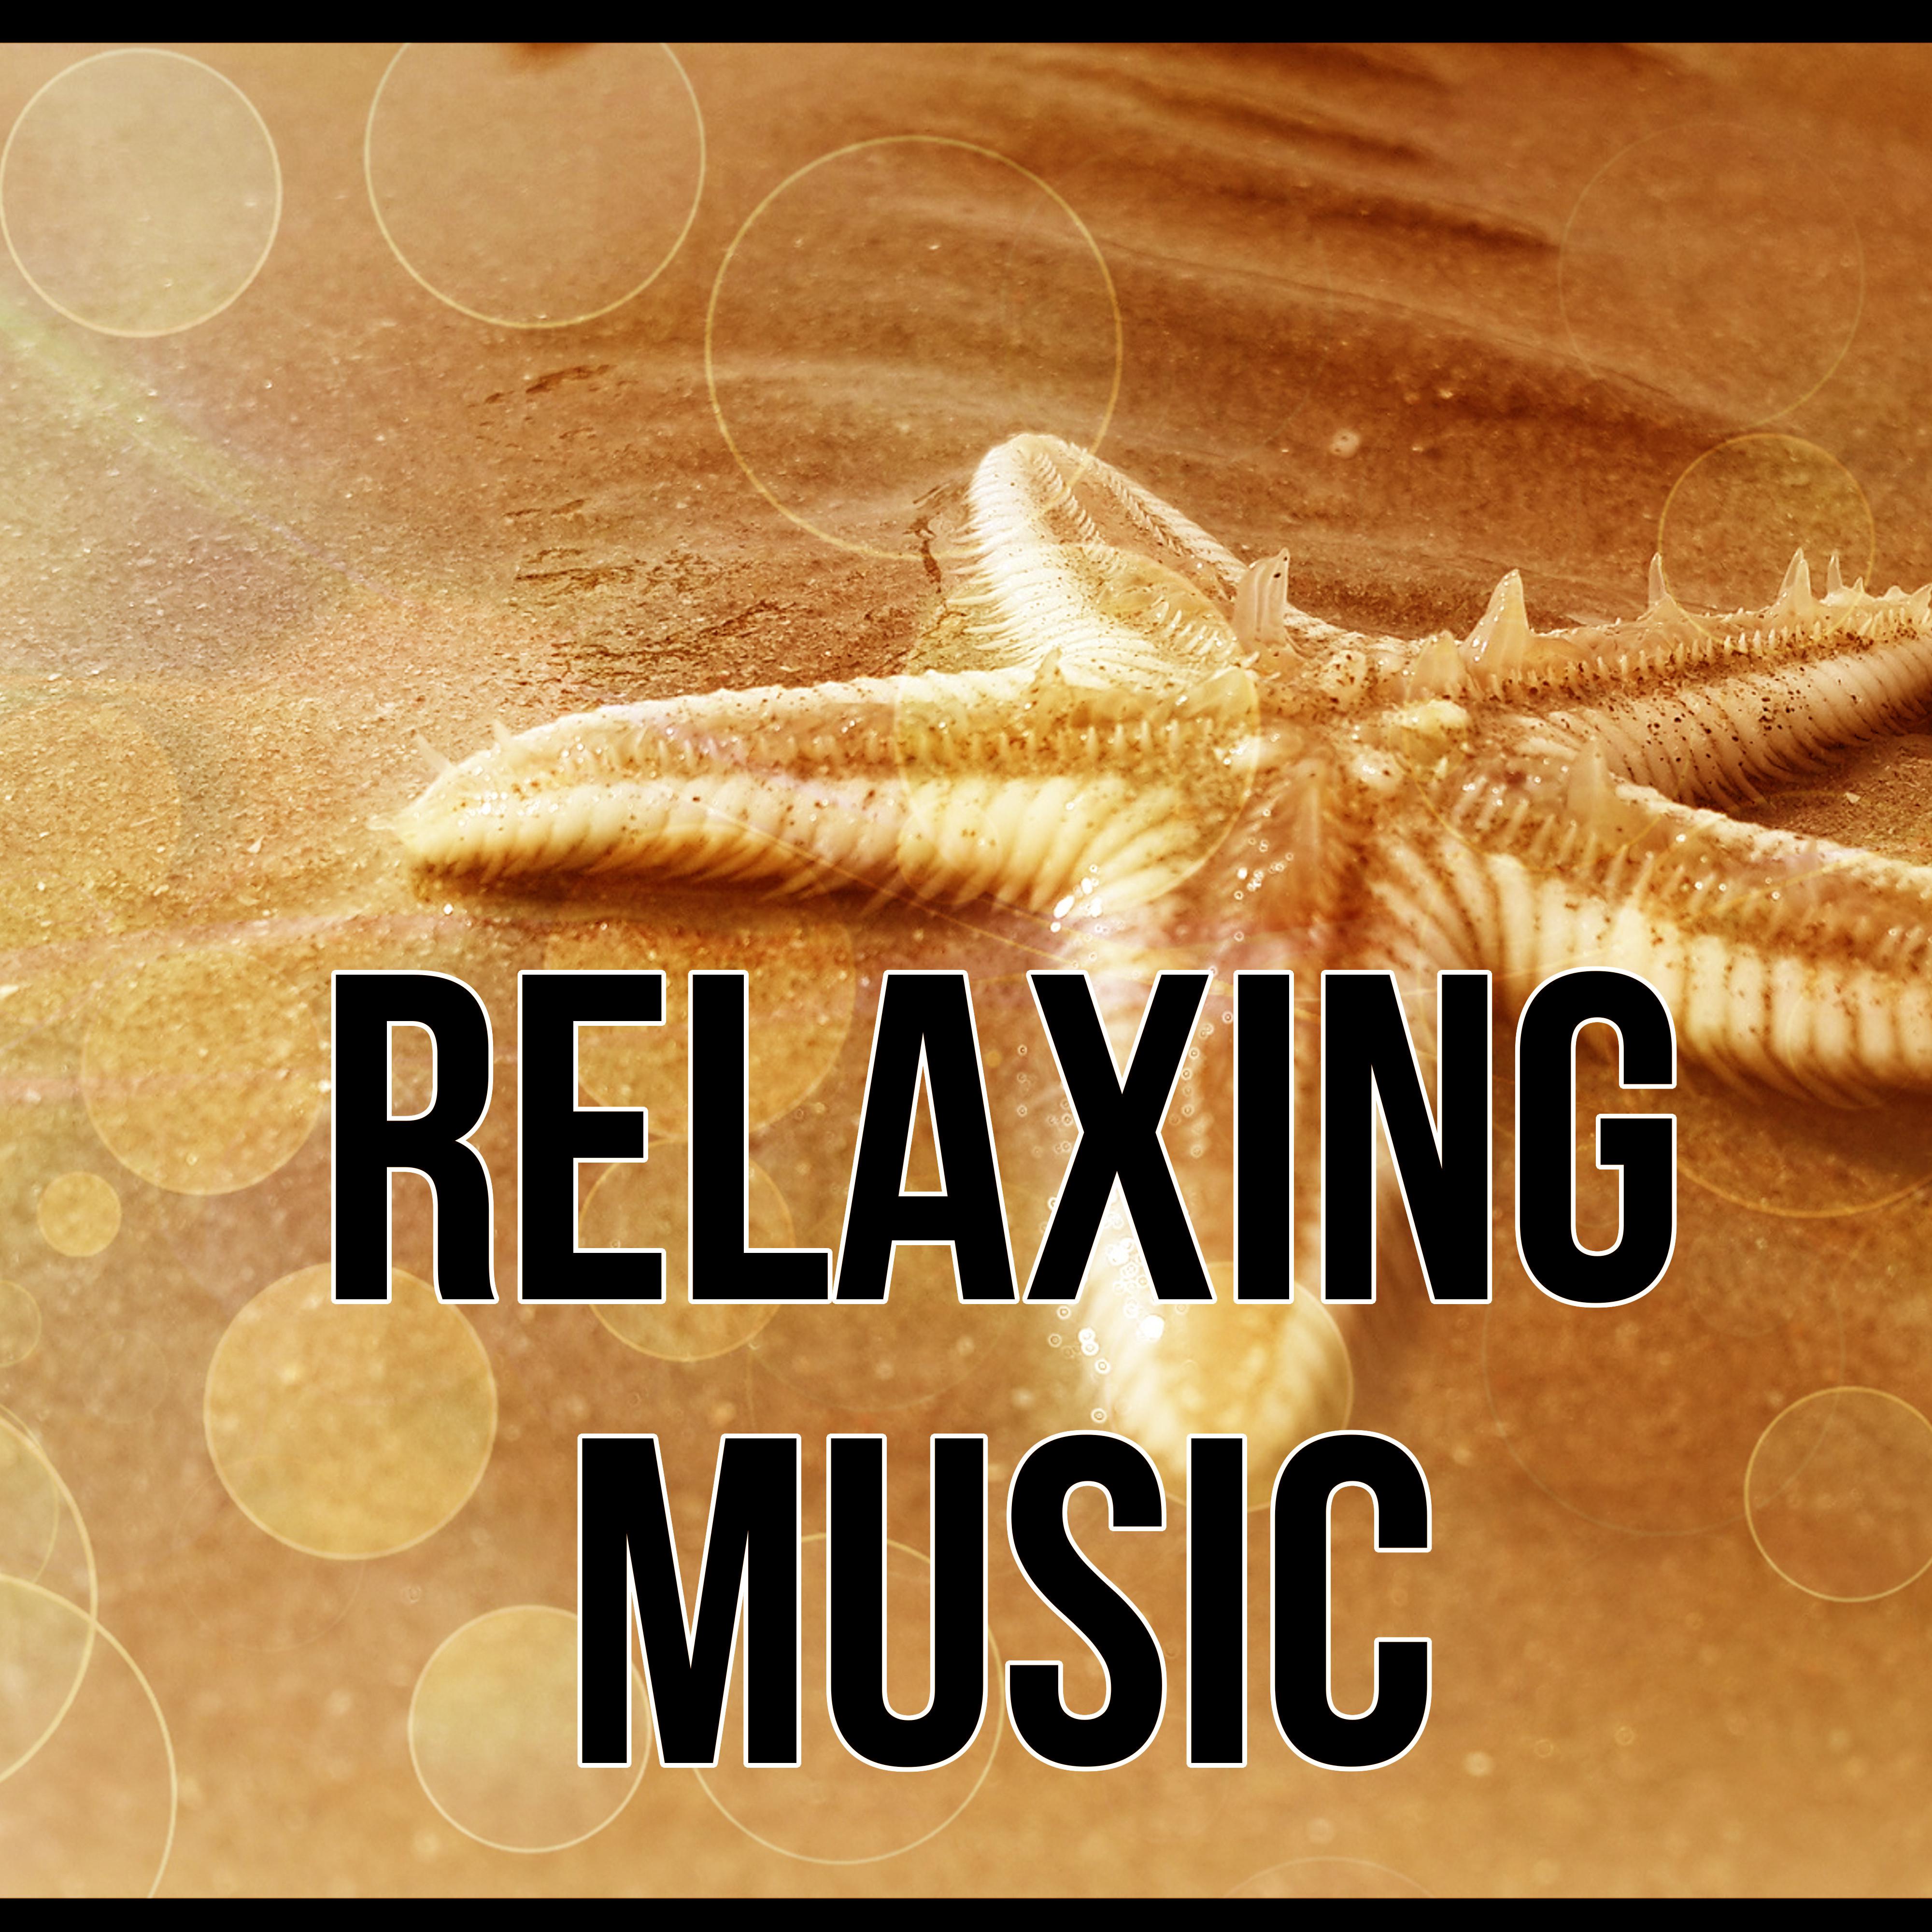 Relaxing Music - Relaxing Nature Sounds, Yoga, Native Flute Meditation, Instrumental Music, Spa Music, Massage Therapy, Reiki Healing, Healing Music, Zen